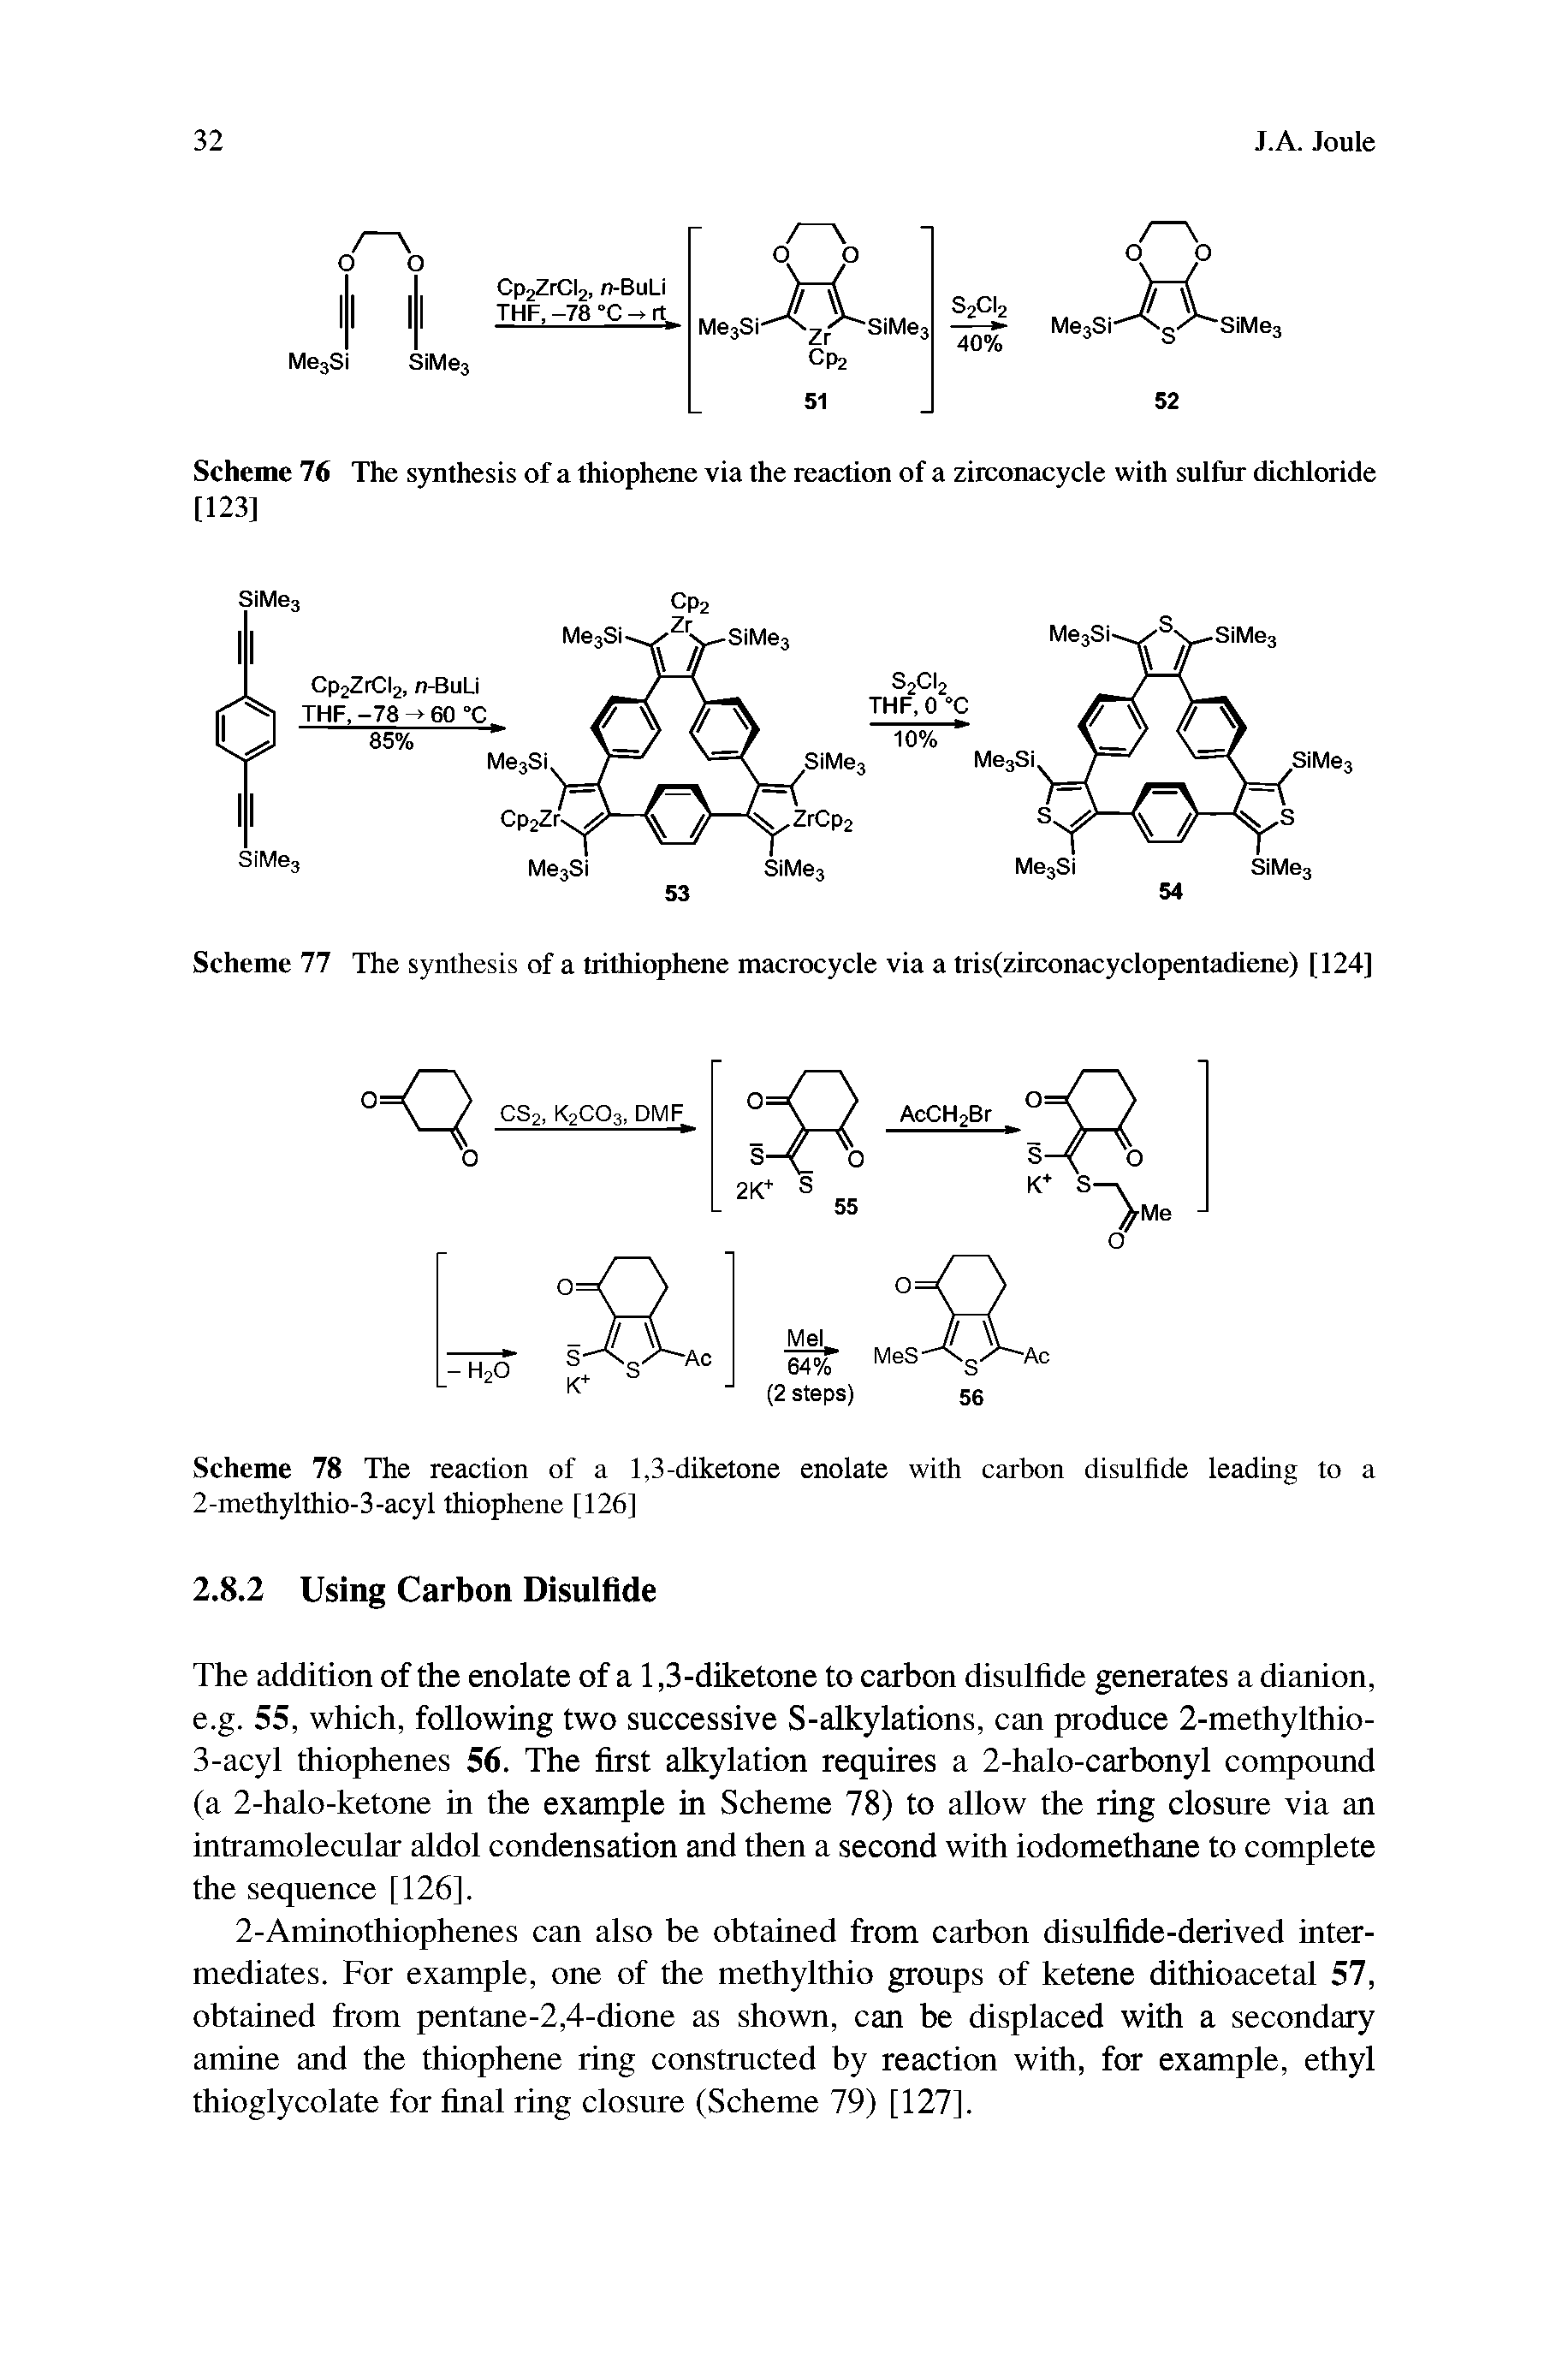 Scheme 78 The reaction of a 1,3-diketone enolate with carbon disulfide leading to a 2-methylthio-3-acyl thiophene [126]...